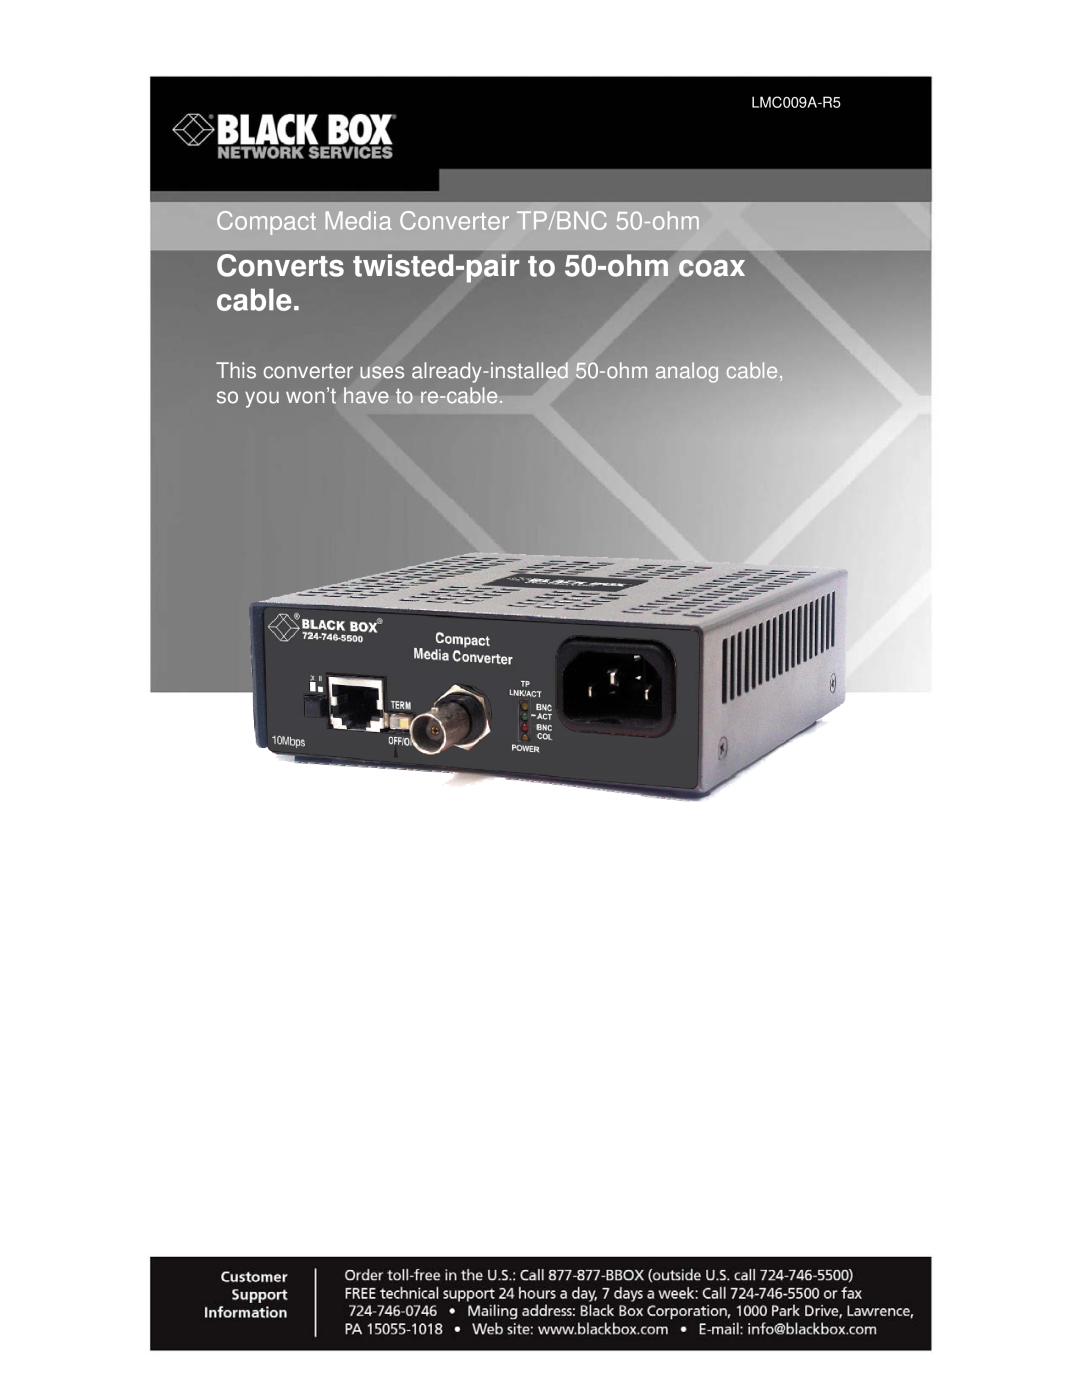 Black Box Compact Media Converter TP/BNC 50-ohm, LMCD09A-FI5 manual Converts twisted-pair to 50-ohm coax cable, LMC009A-R5 